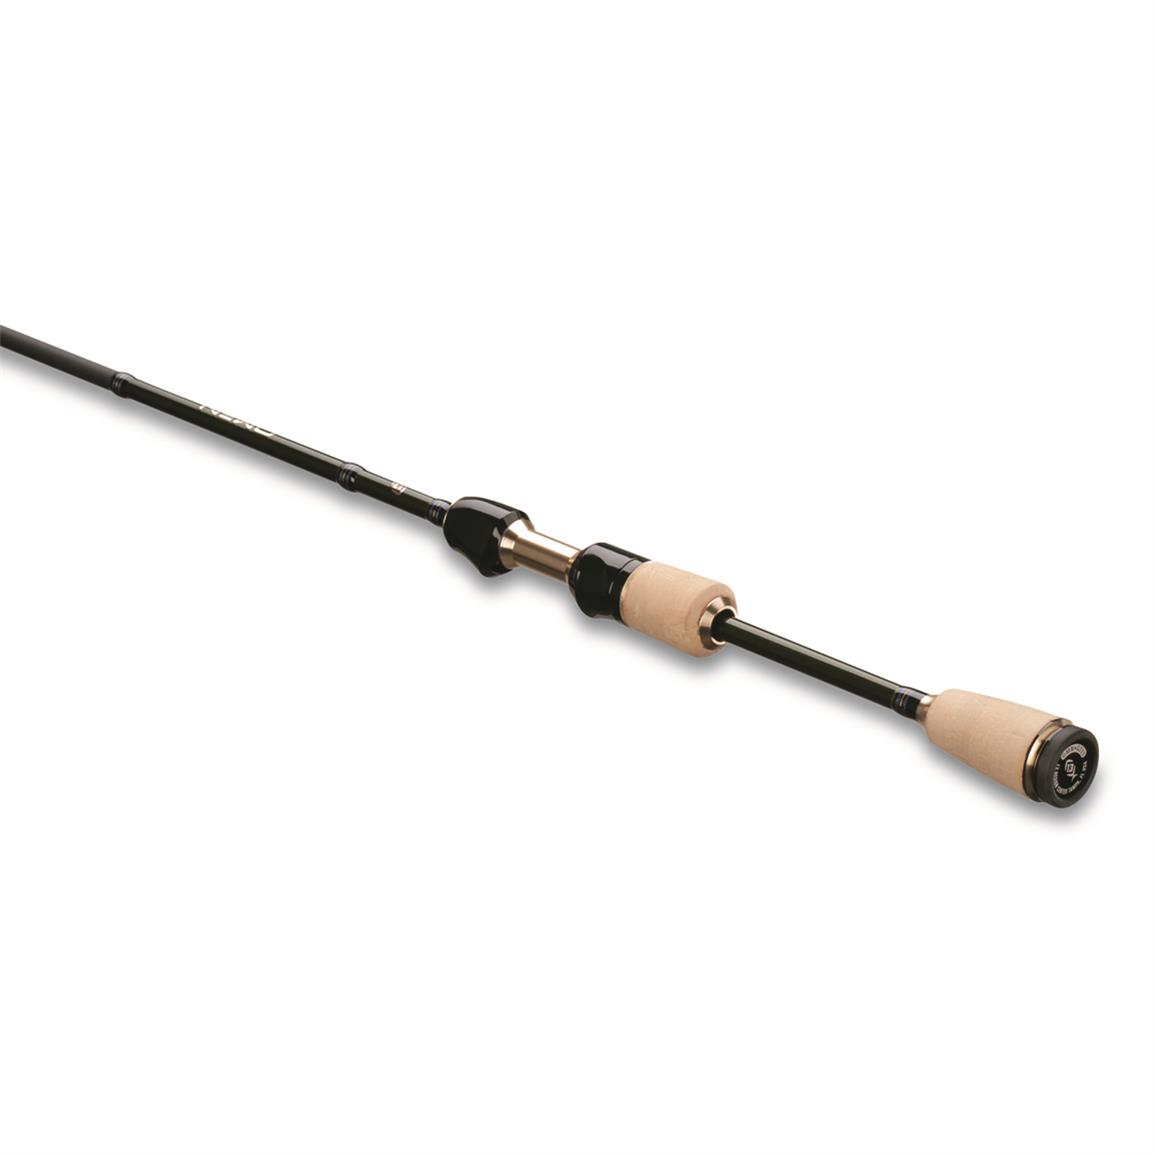 13 Fishing Omen Panfish Spinning Rod, 7' Length, Light Power, Fast Action